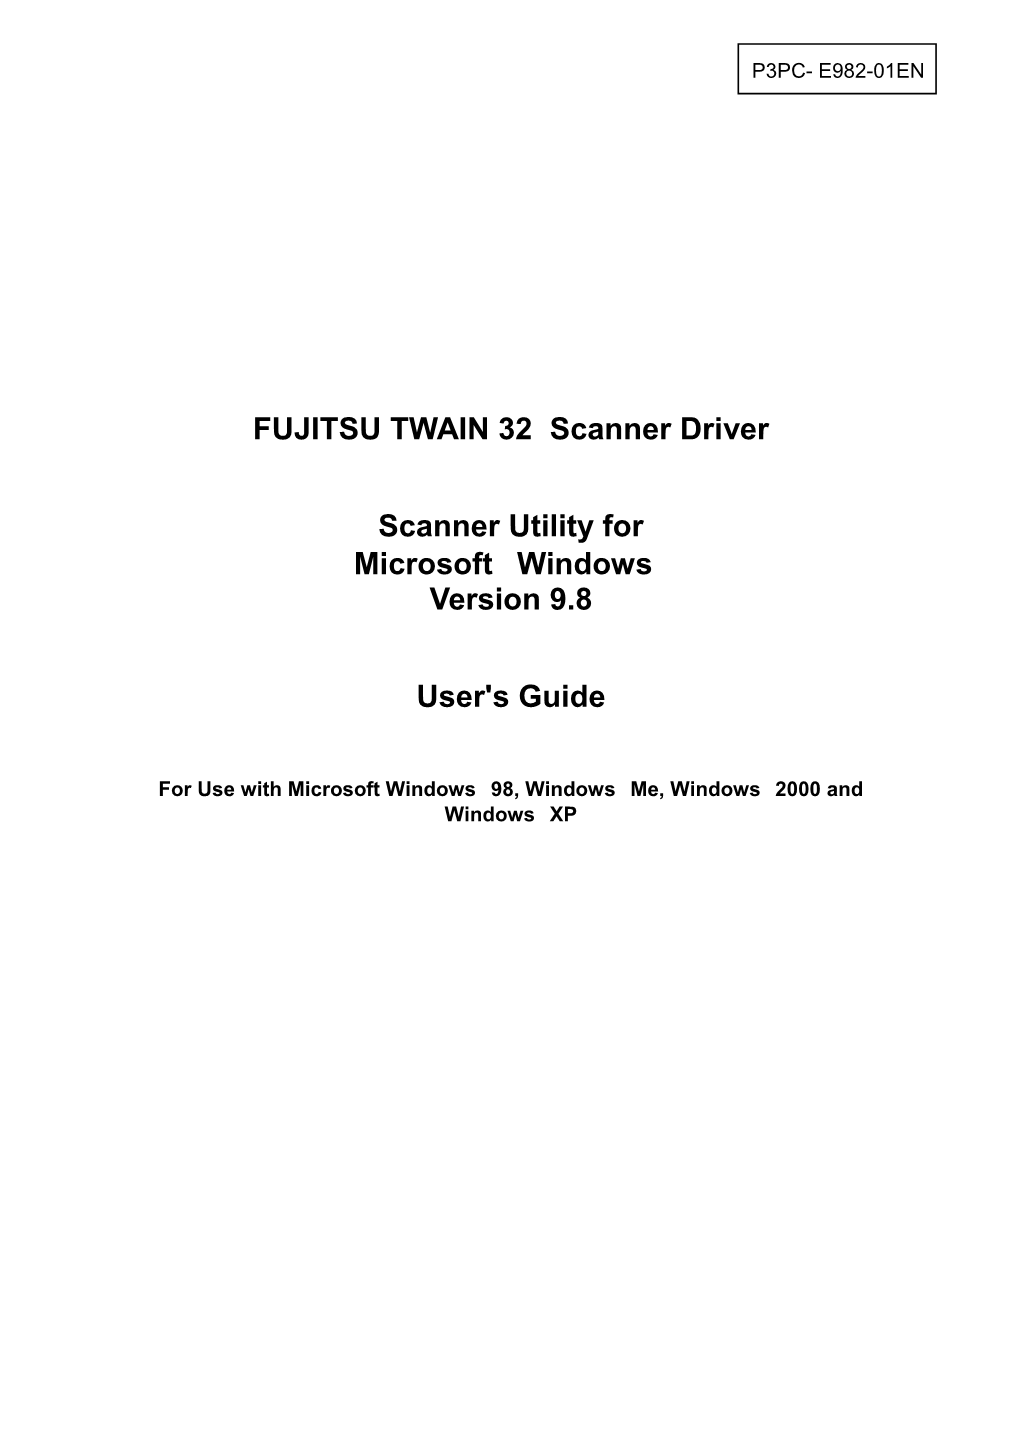 FUJITSU TWAIN 32 Scanner Driver Scanner Utility for Microsoft Windows Version 9.8 User's Guide